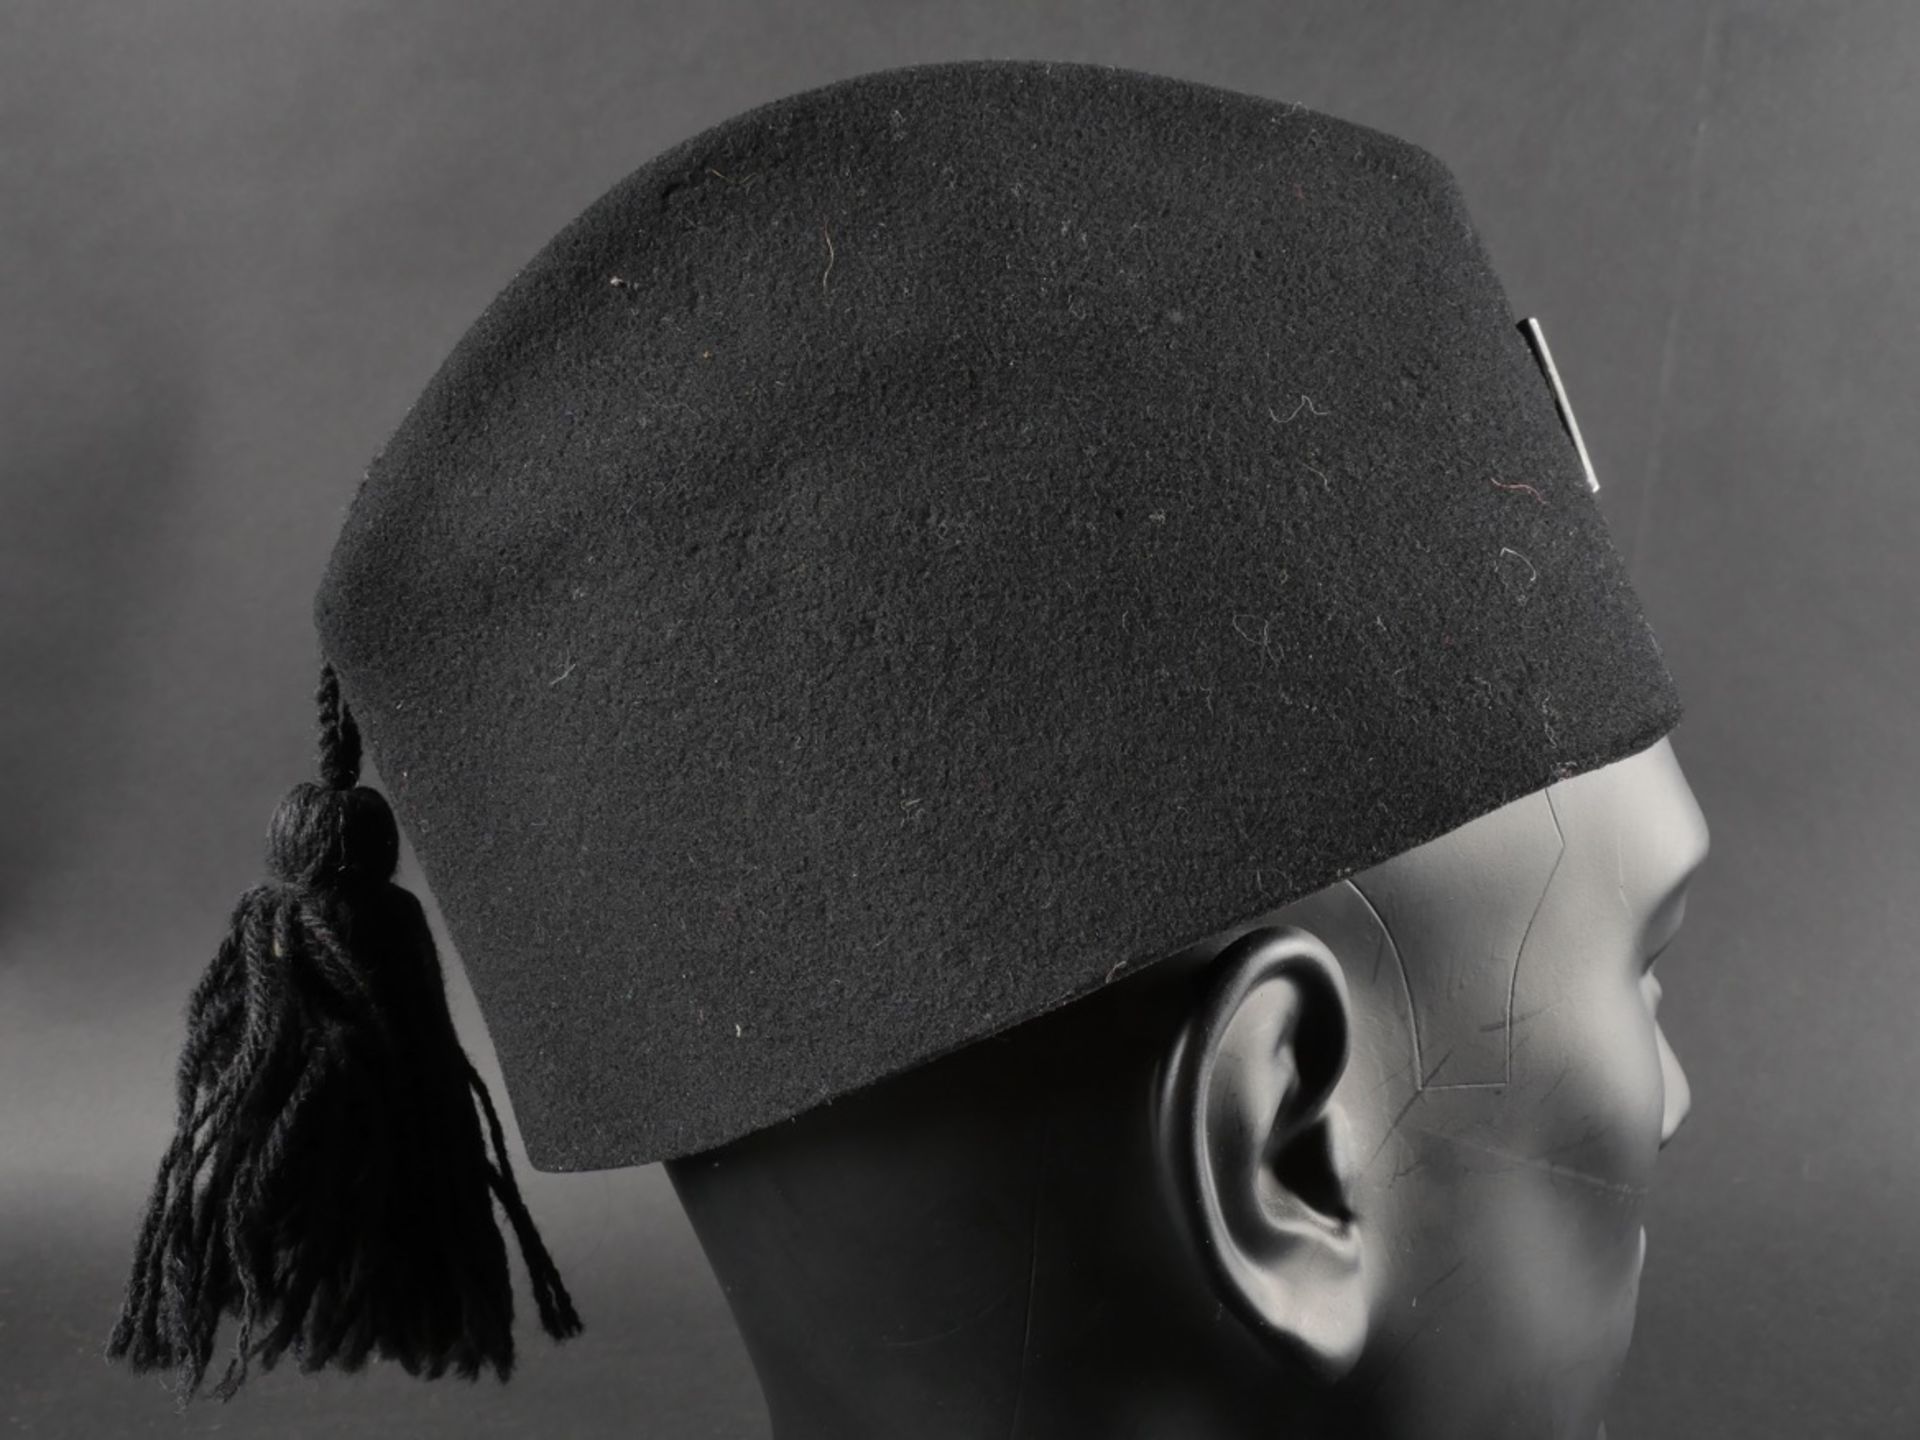 Coiffure de mouvement de jeunesse fasciste. Fascist youth movement headdress. - Image 6 of 11